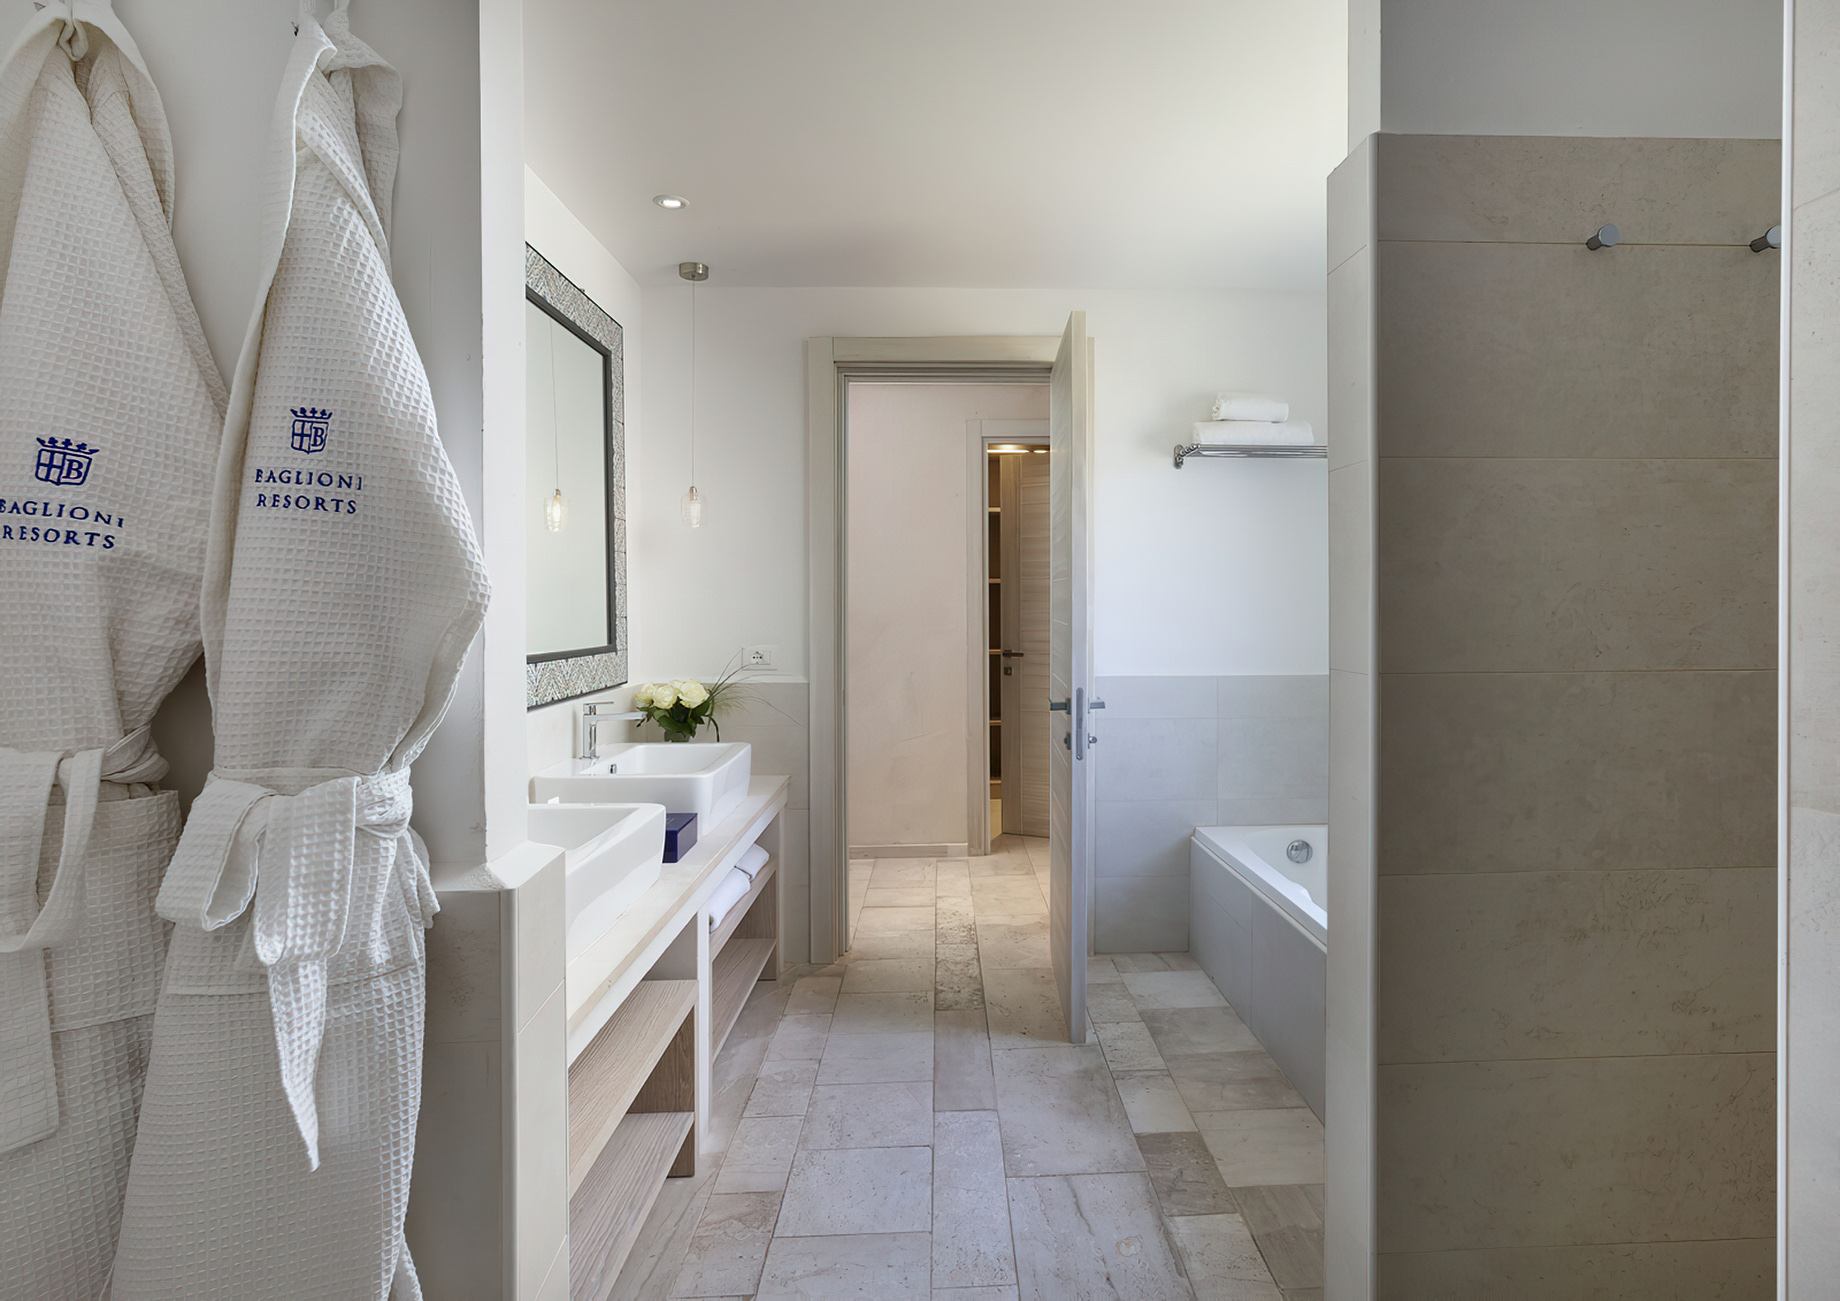 Baglioni Resort Sardinia – San Teodoro, Sardegna, Italy – Sea View Suite Bathroom